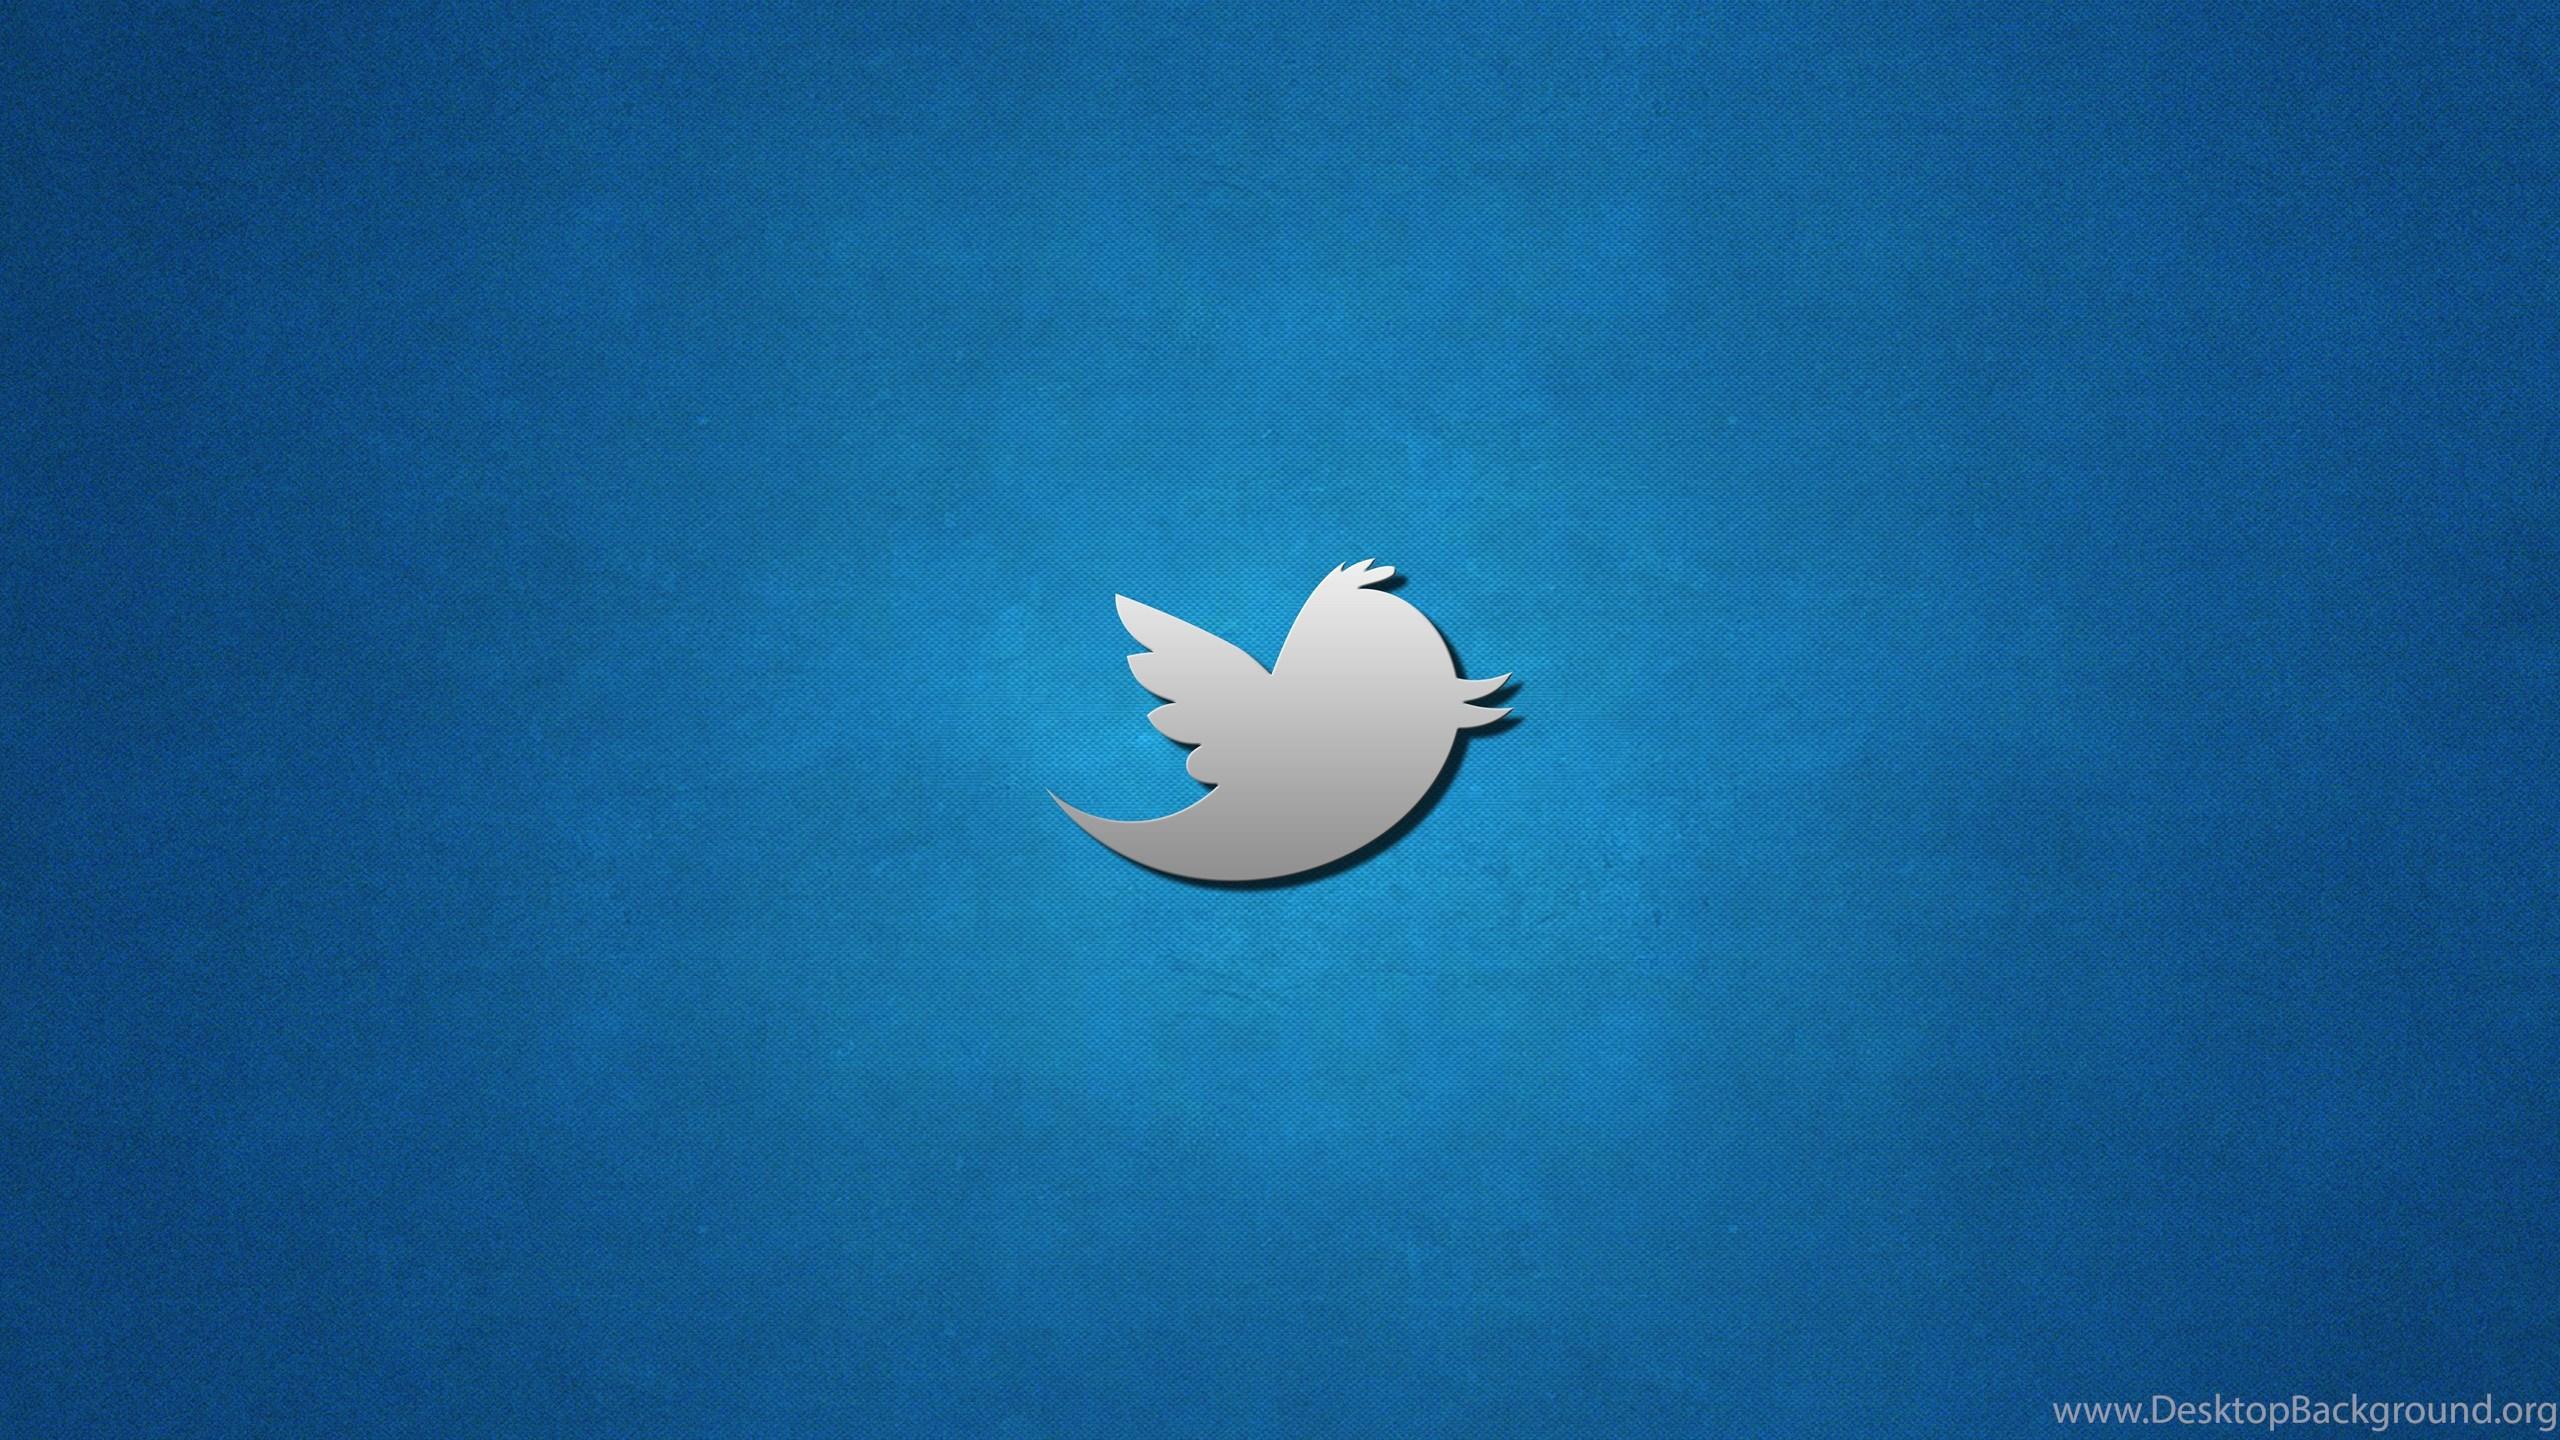 1920x1200px Twitter Wallpaper For Desktop Desktop Background